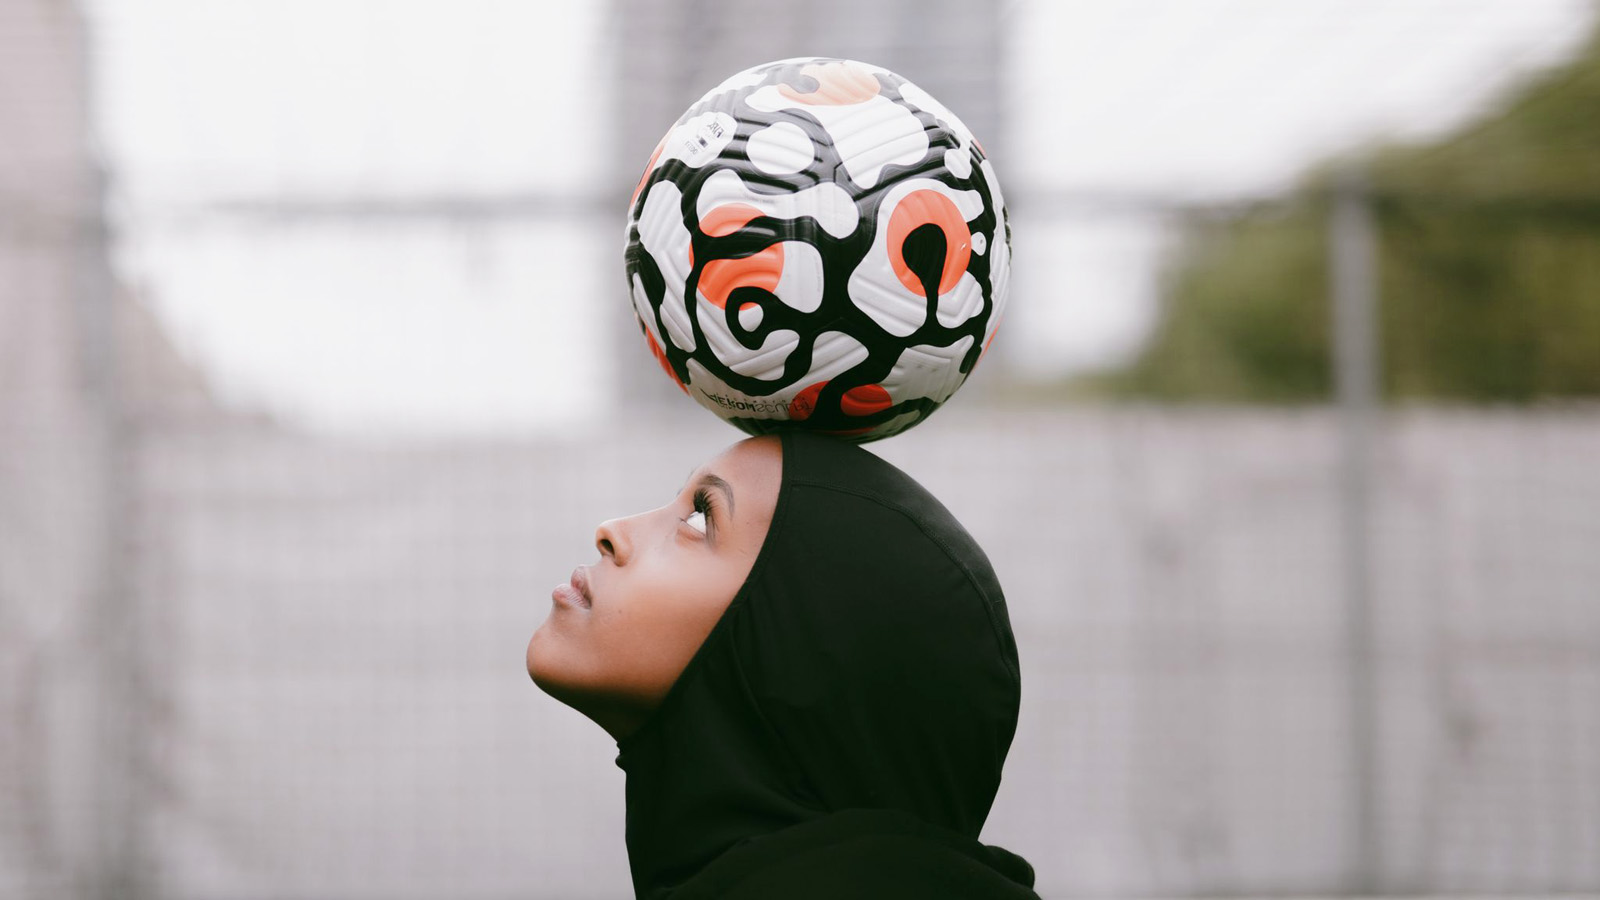 Football and Hijab